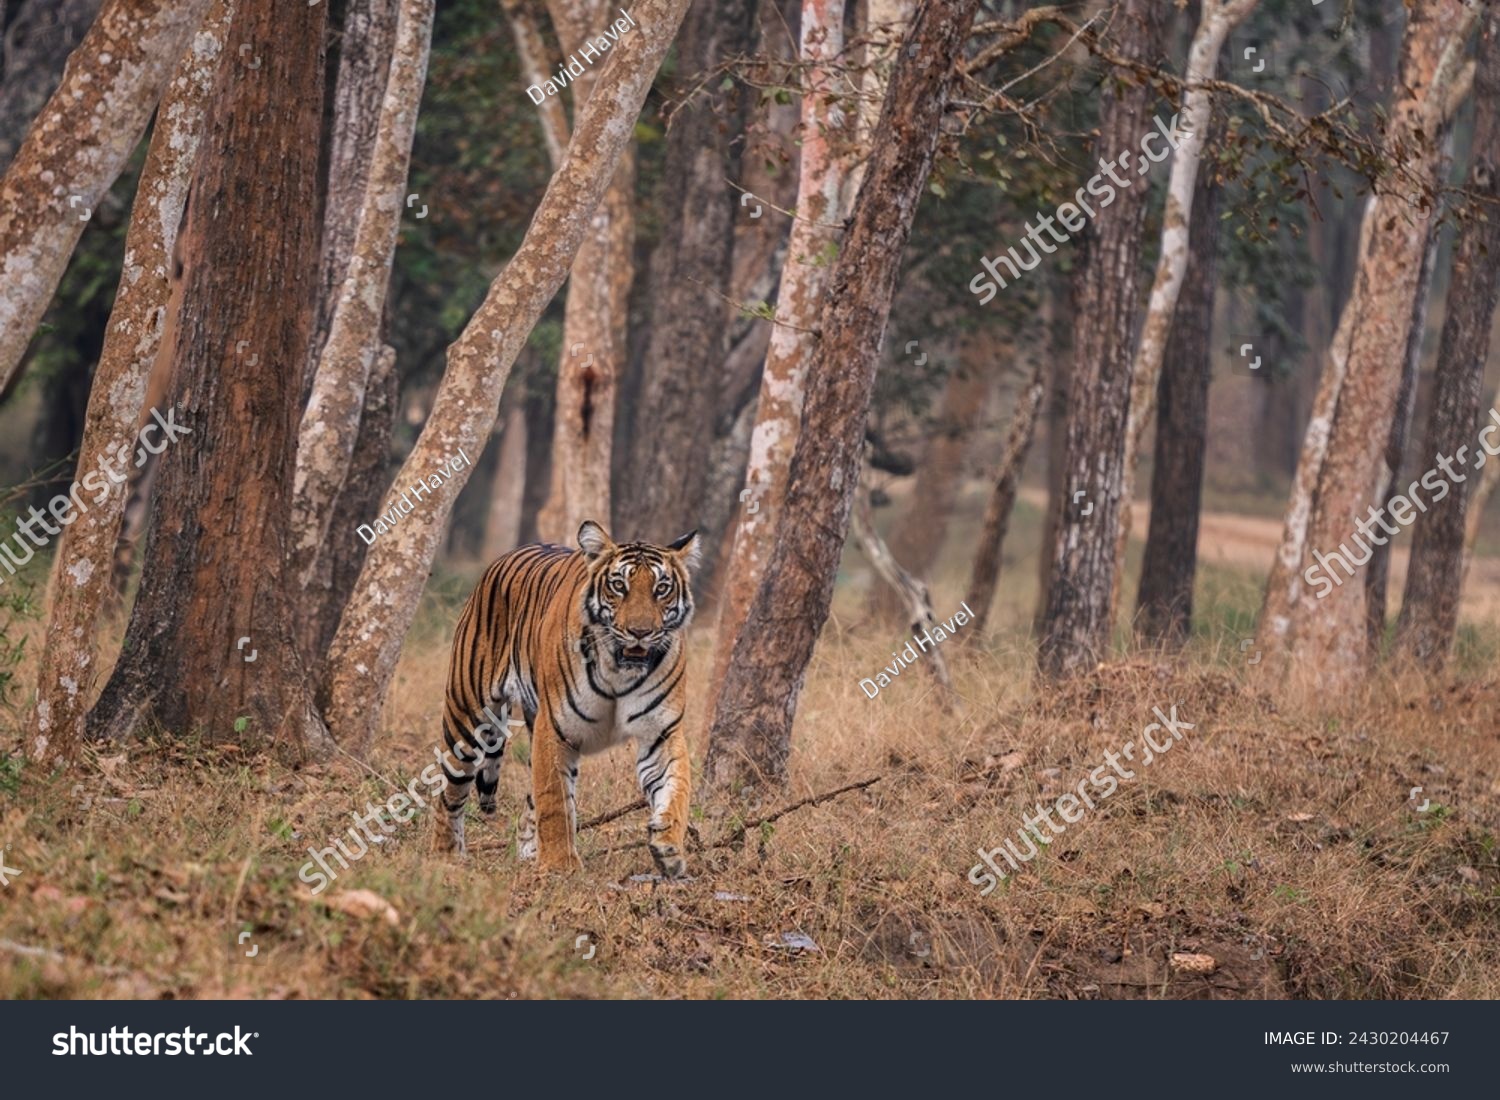 Bengal Tiger - Panthera Tigris tigris, beautiful colored large cat from South Asian forests and woodlands, Nagarahole Tiger Reserve, India. #2430204467